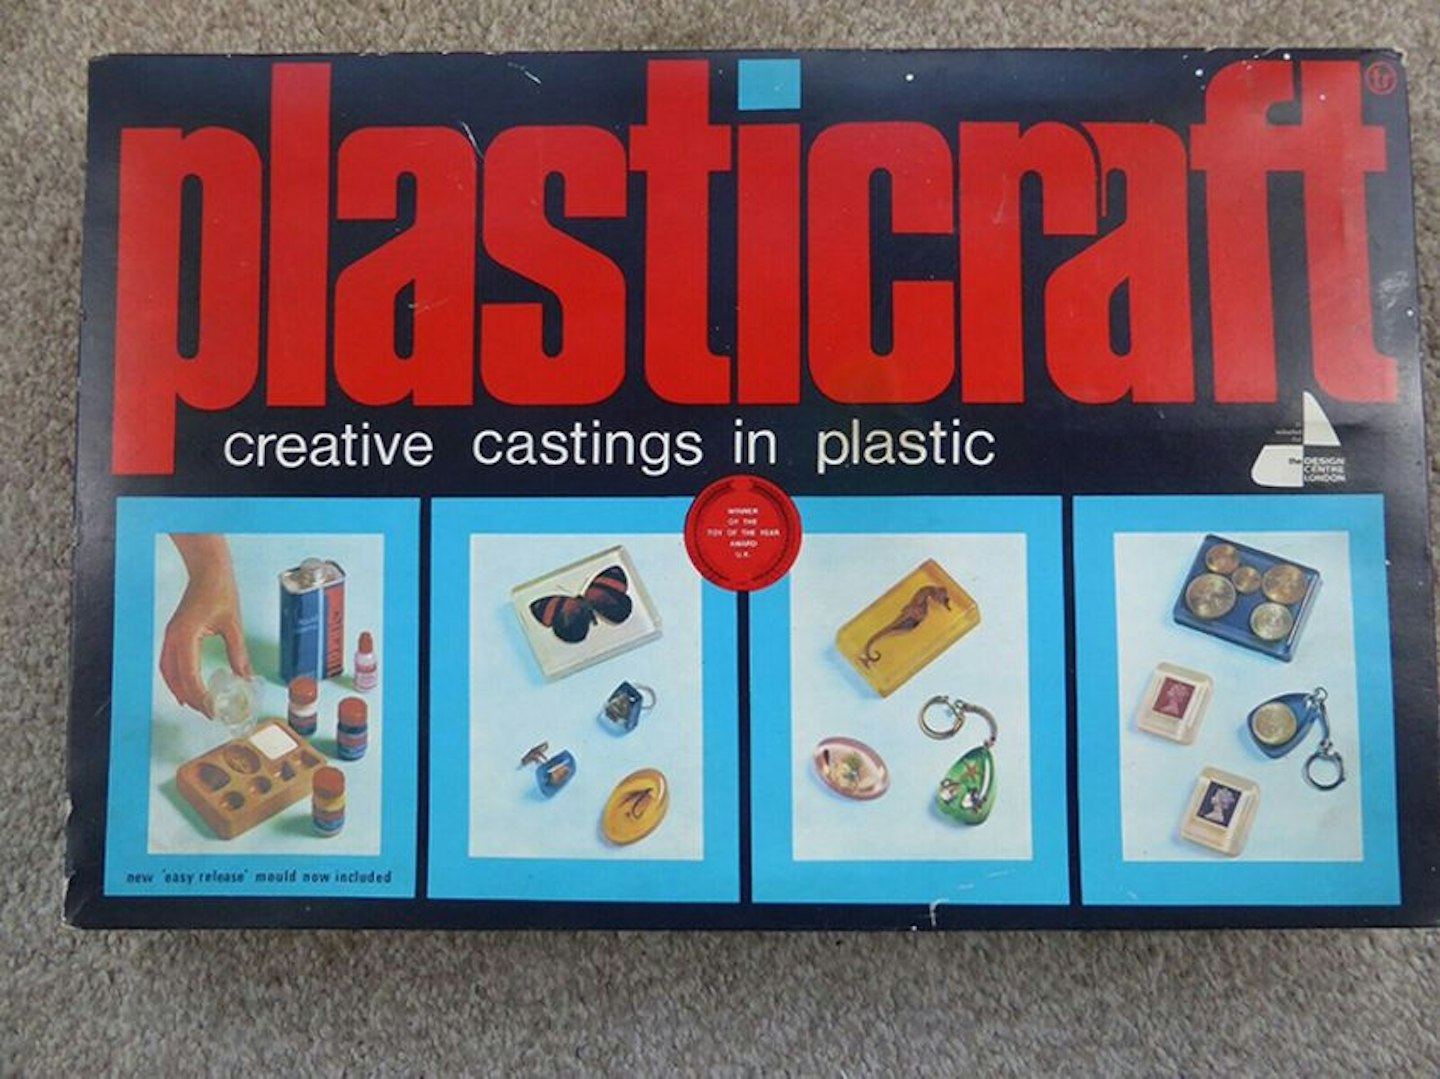 70s toys: Plasticraft